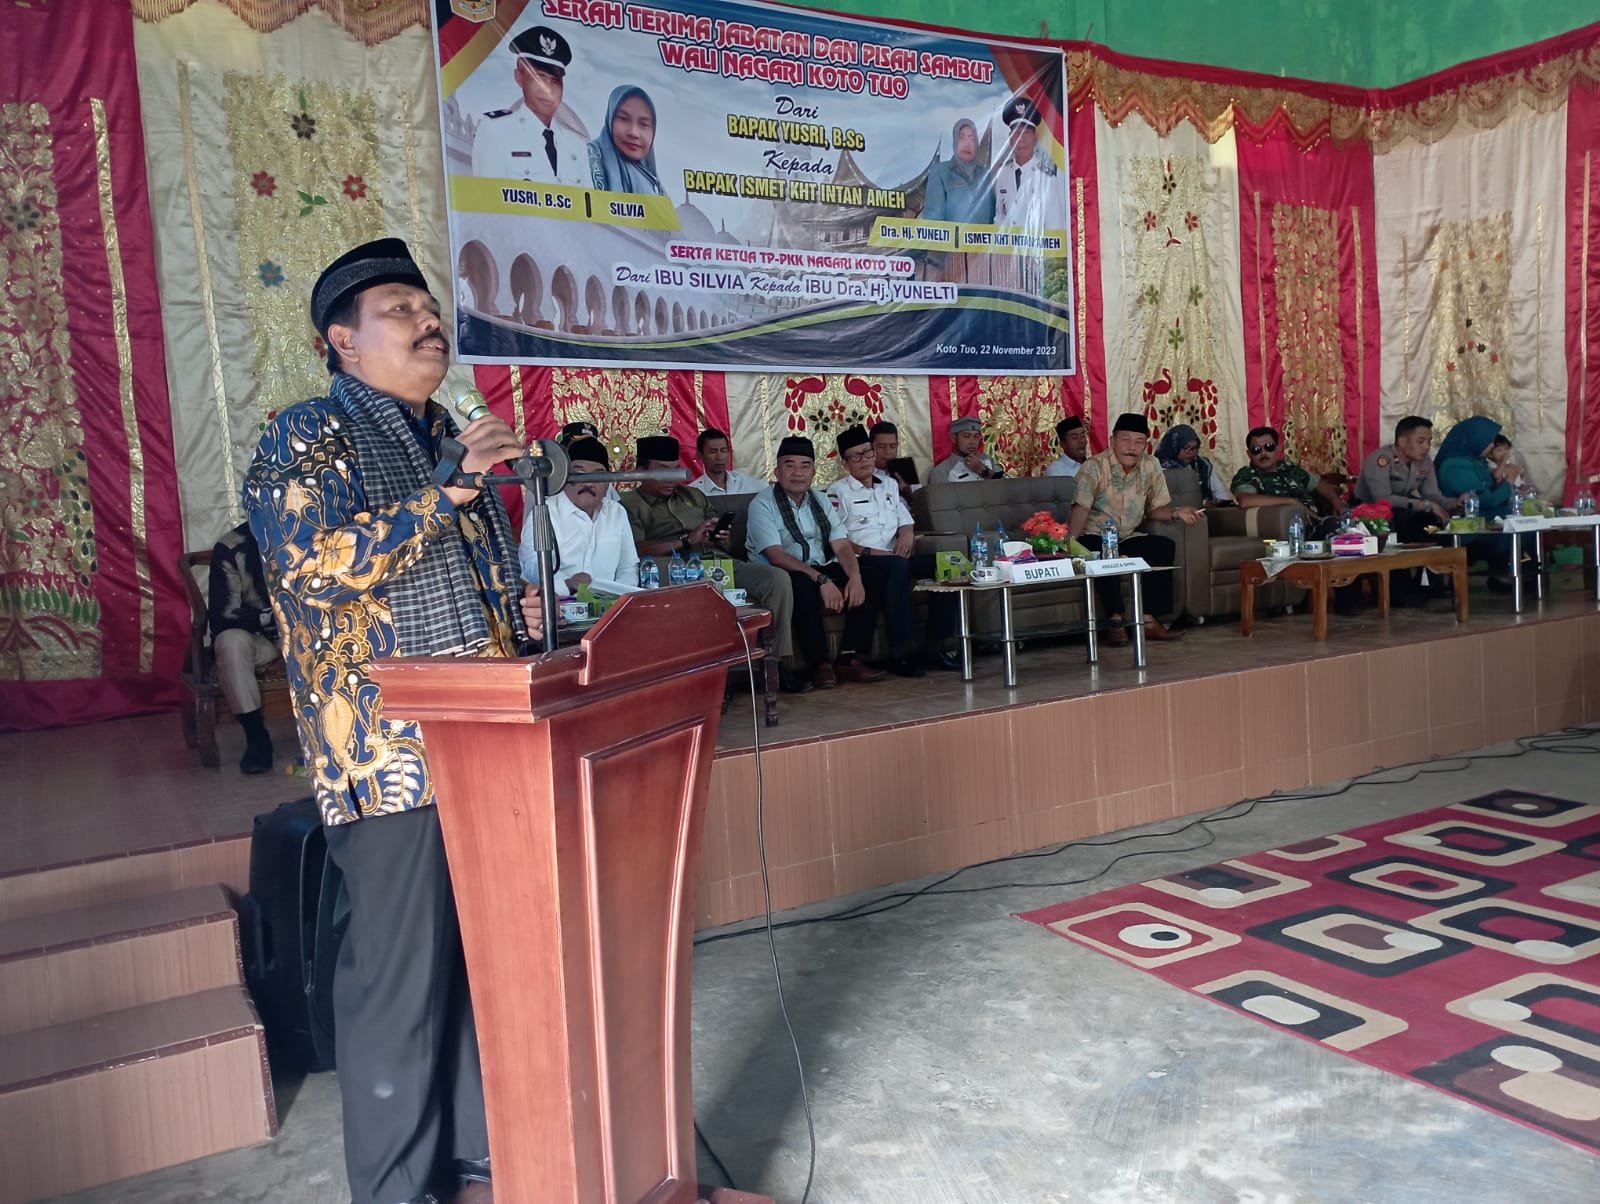 Anggota DPRD Provinsi Sumatera Barat Arkadius. Dt. Intan Bano saat memberi sambutan dalam pisah sambut Wali Nagari Koto Tuo. (Zulhafni)